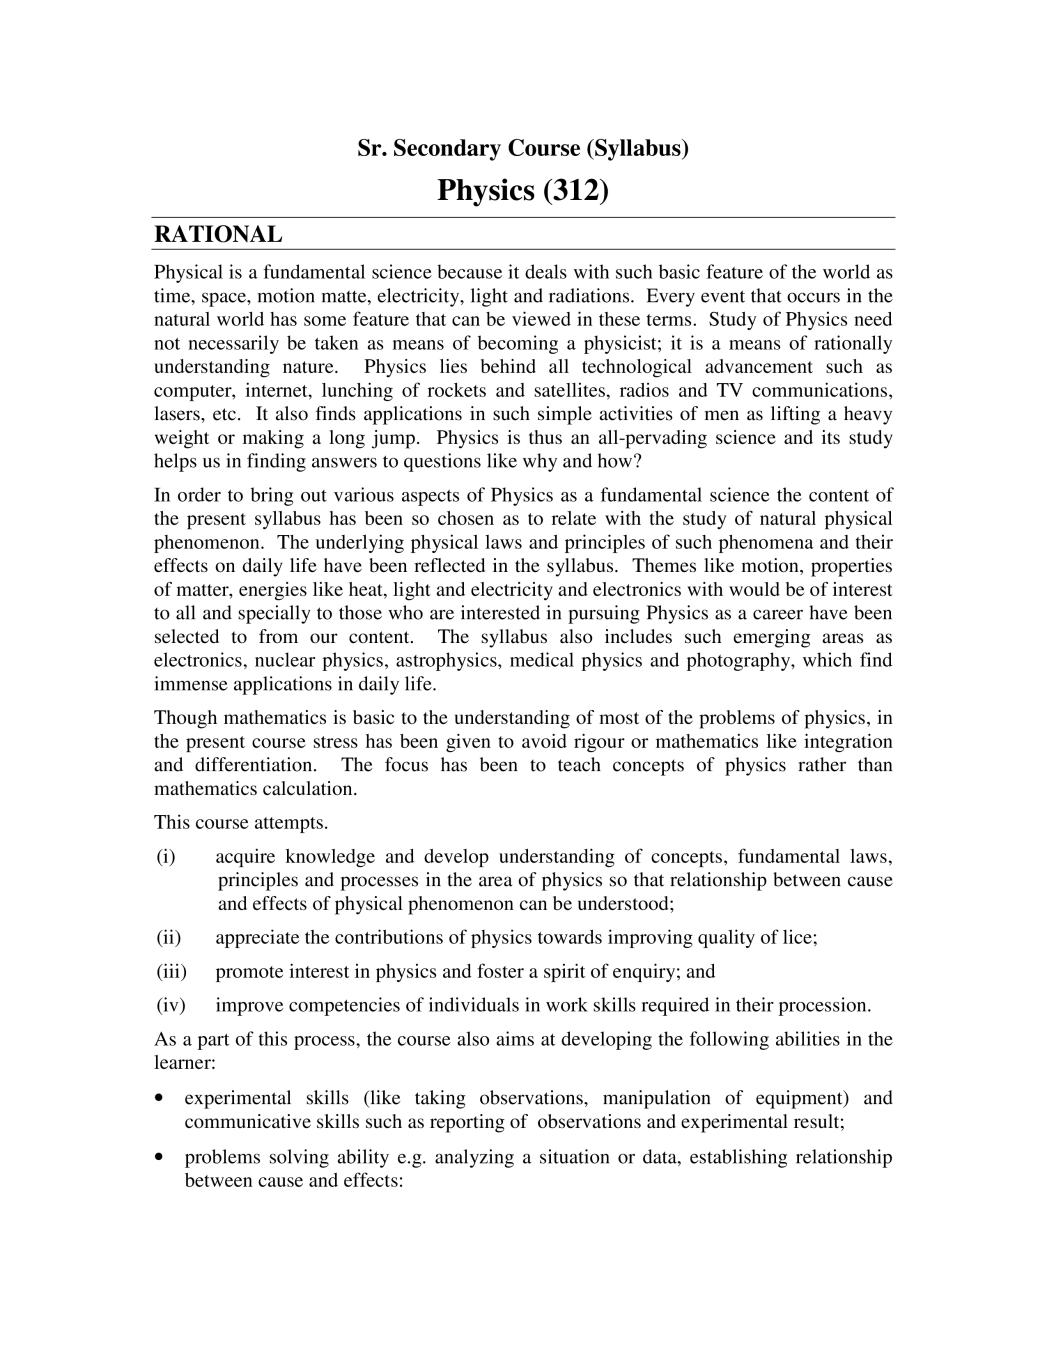 NIOS Class 12 Syllabus - Physics - Page 1